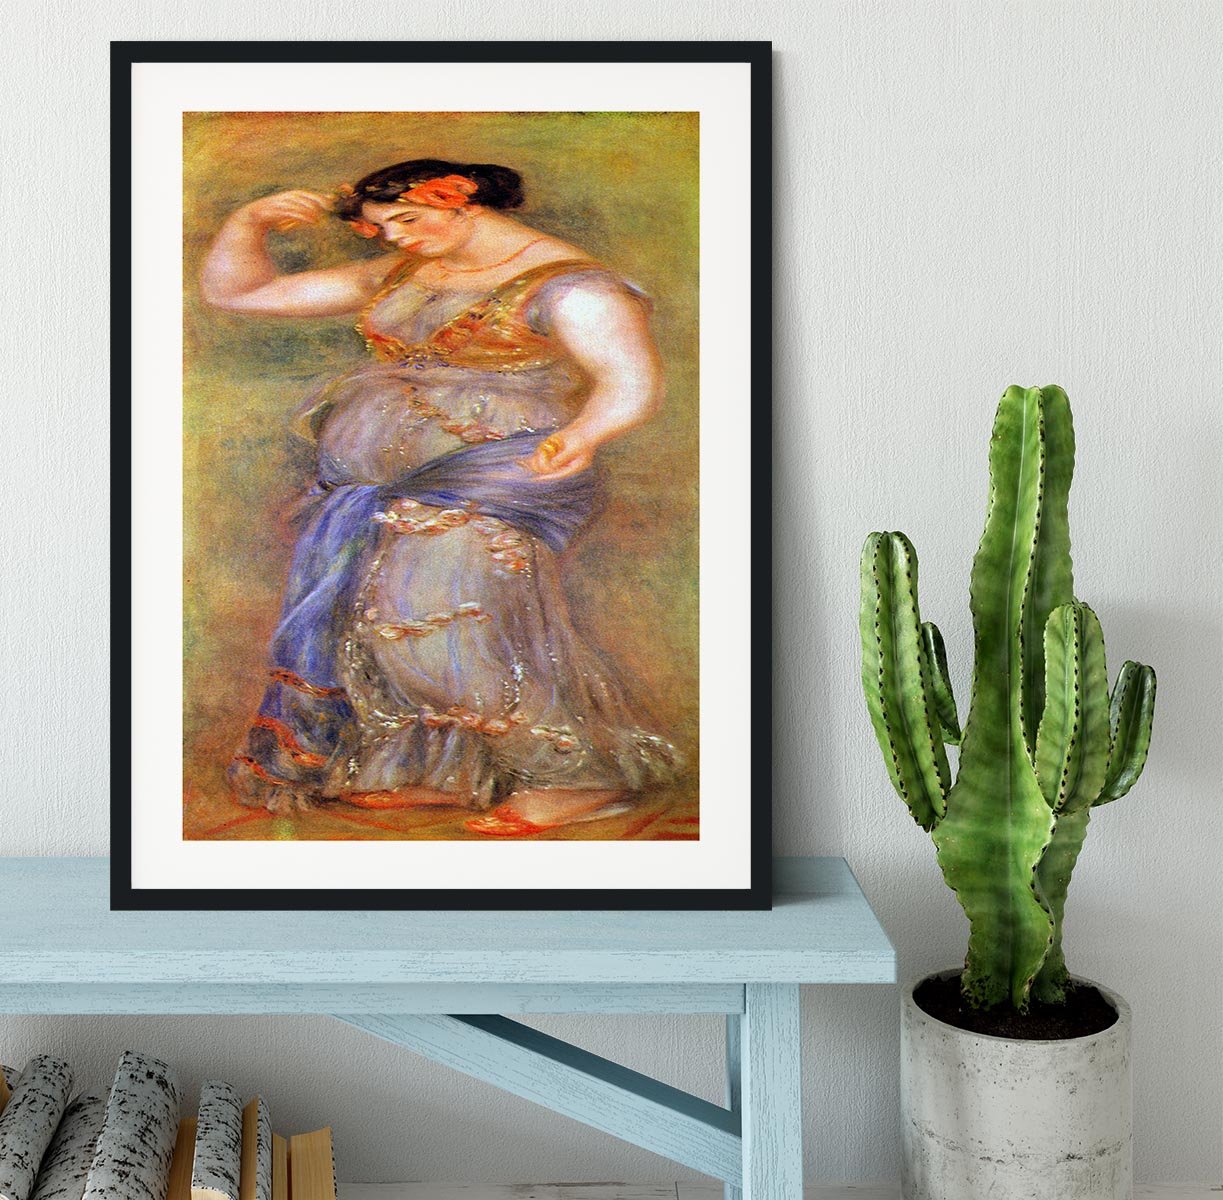 Dancer with castanets by Renoir Framed Print - Canvas Art Rocks - 1